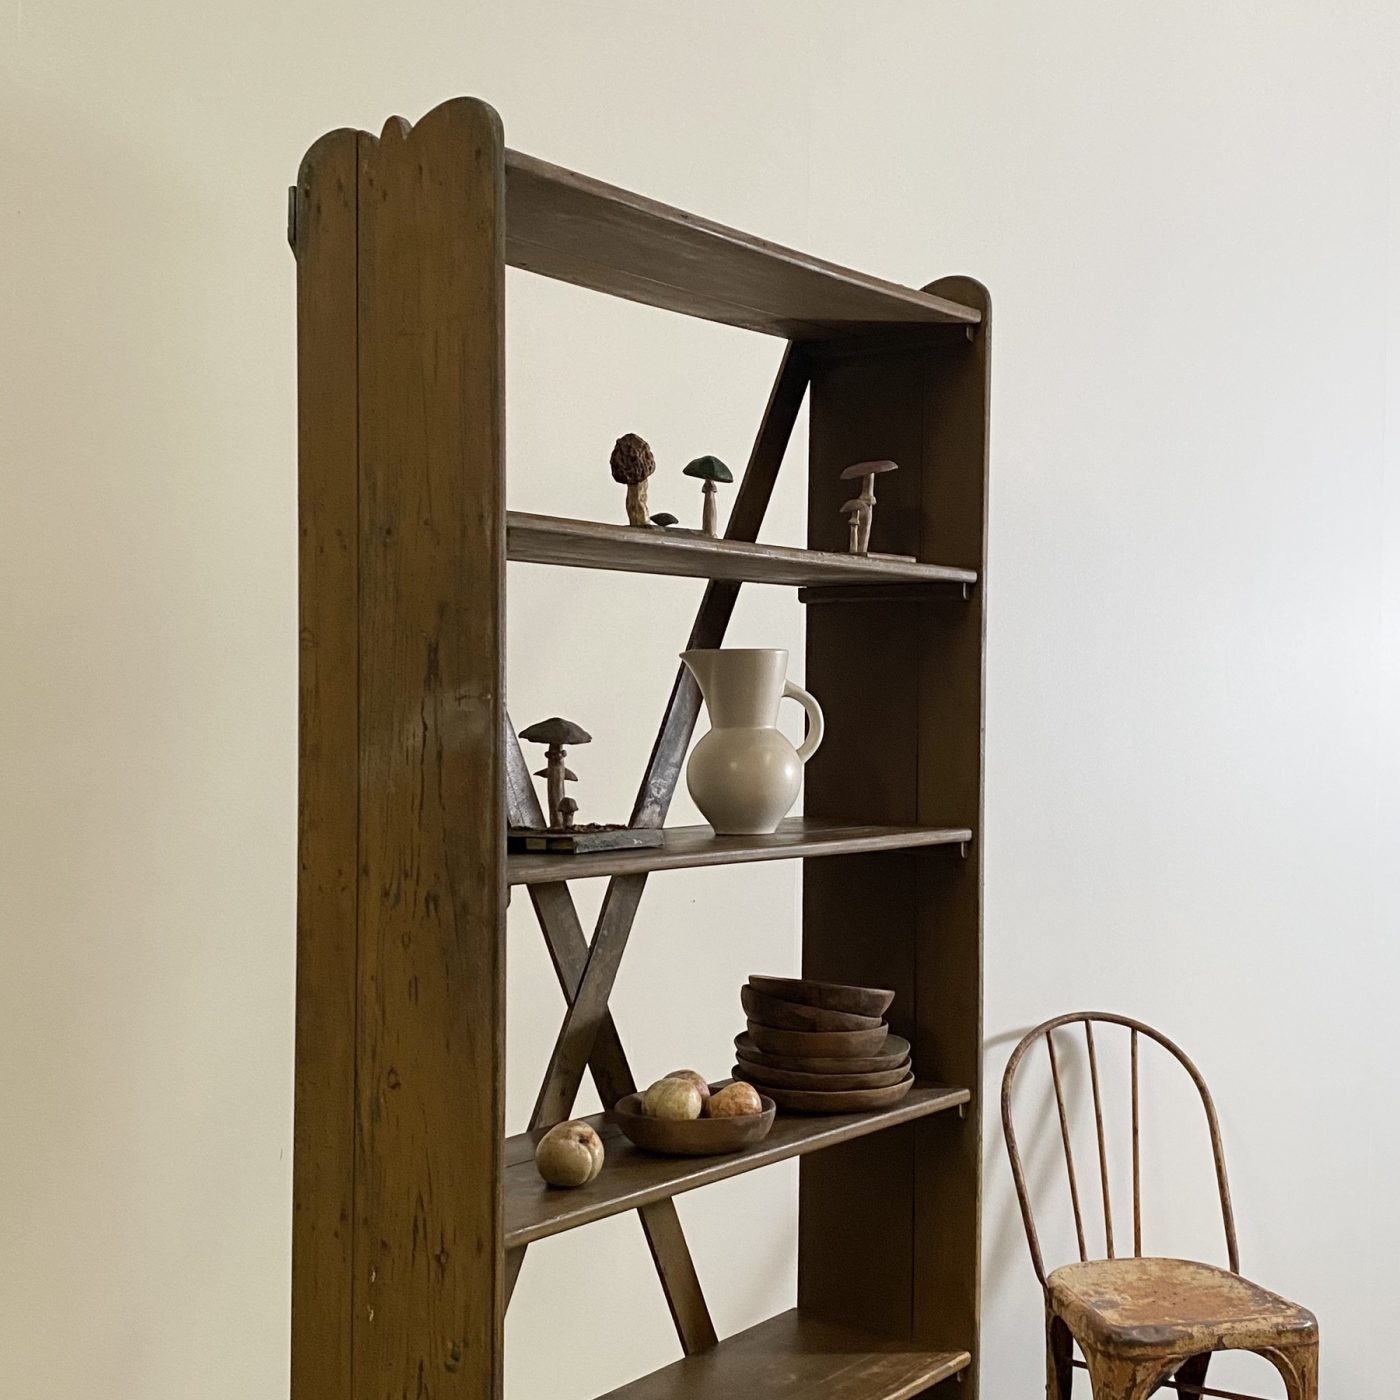 objet-vagabond-wooden-shelf0003